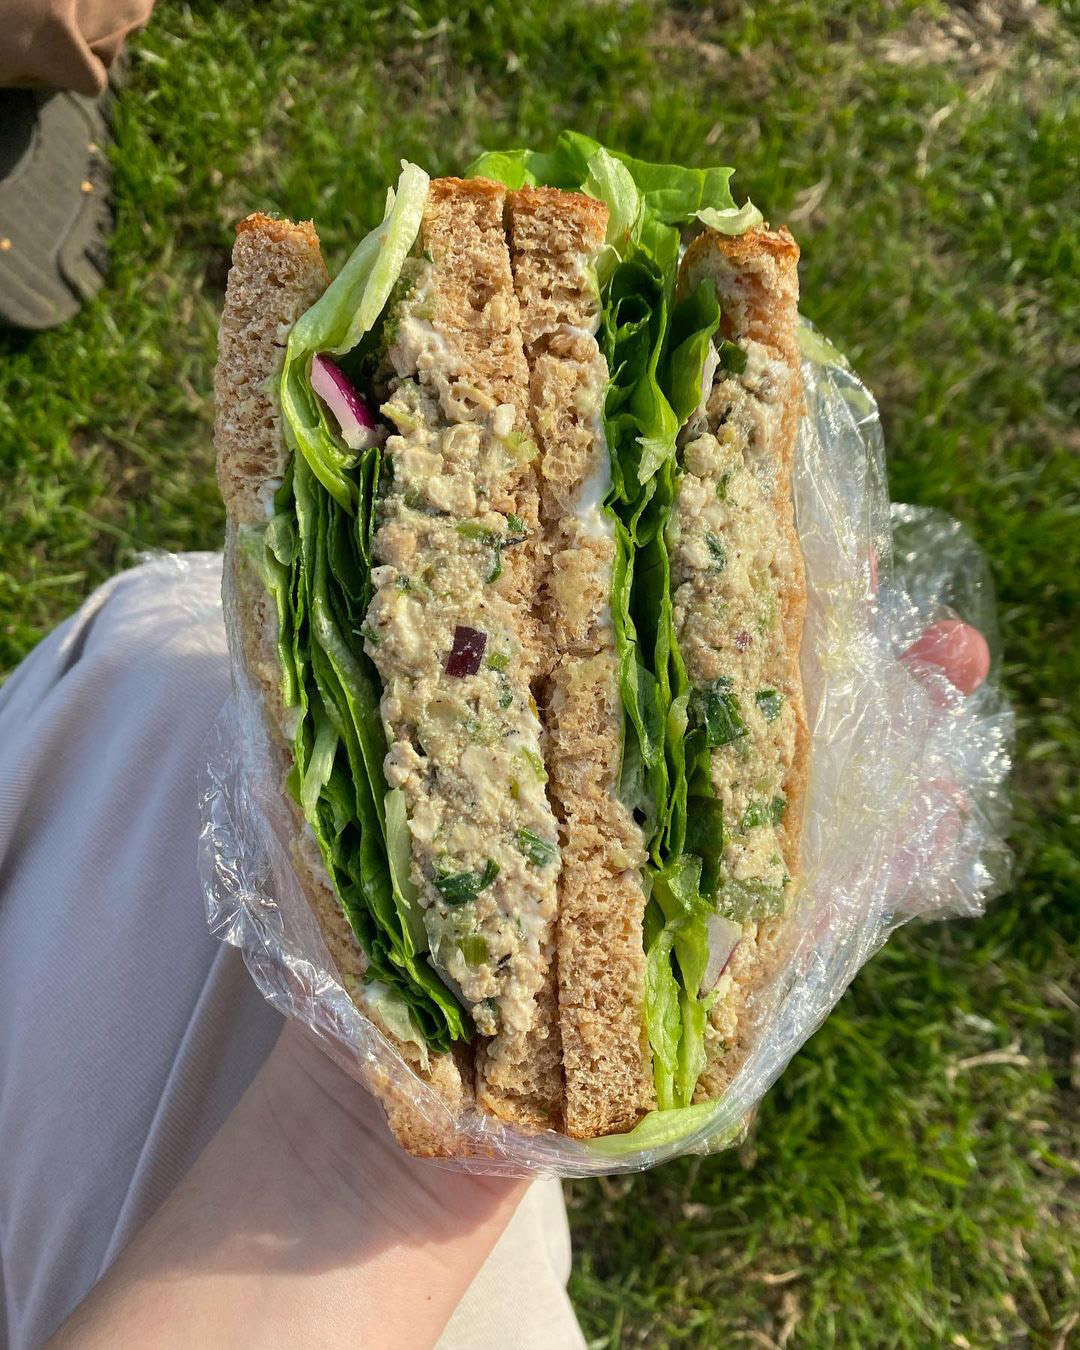 Brighter Day tofu sandwich in hand